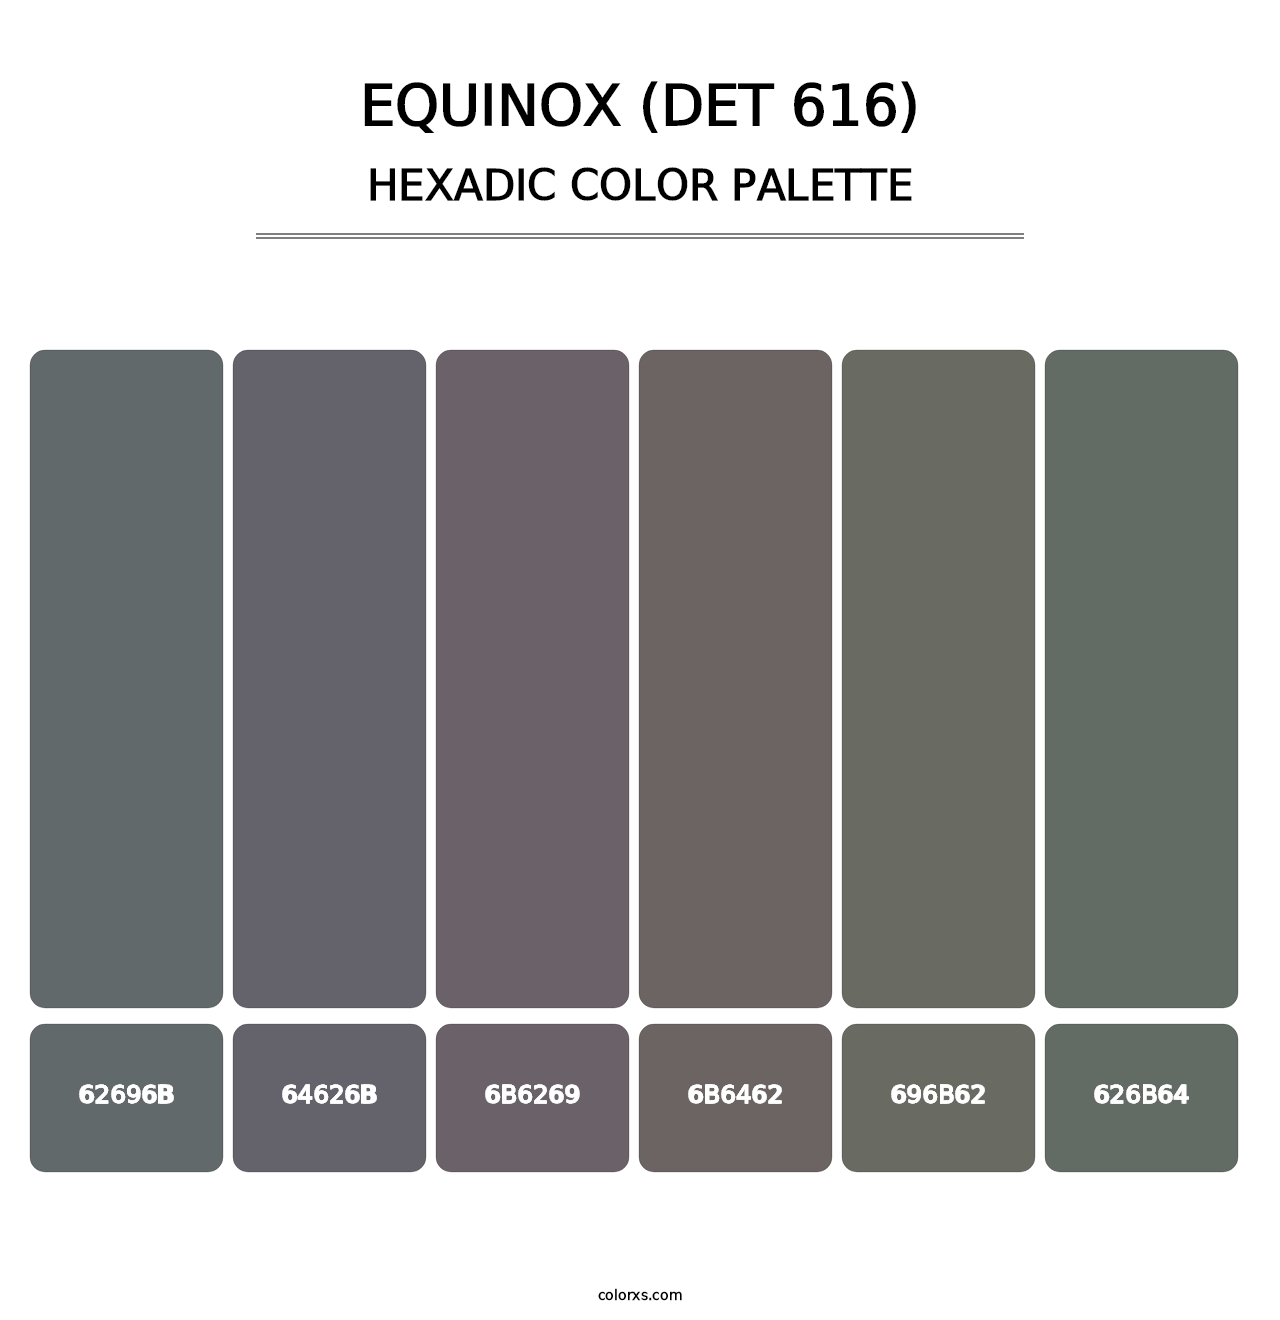 Equinox (DET 616) - Hexadic Color Palette